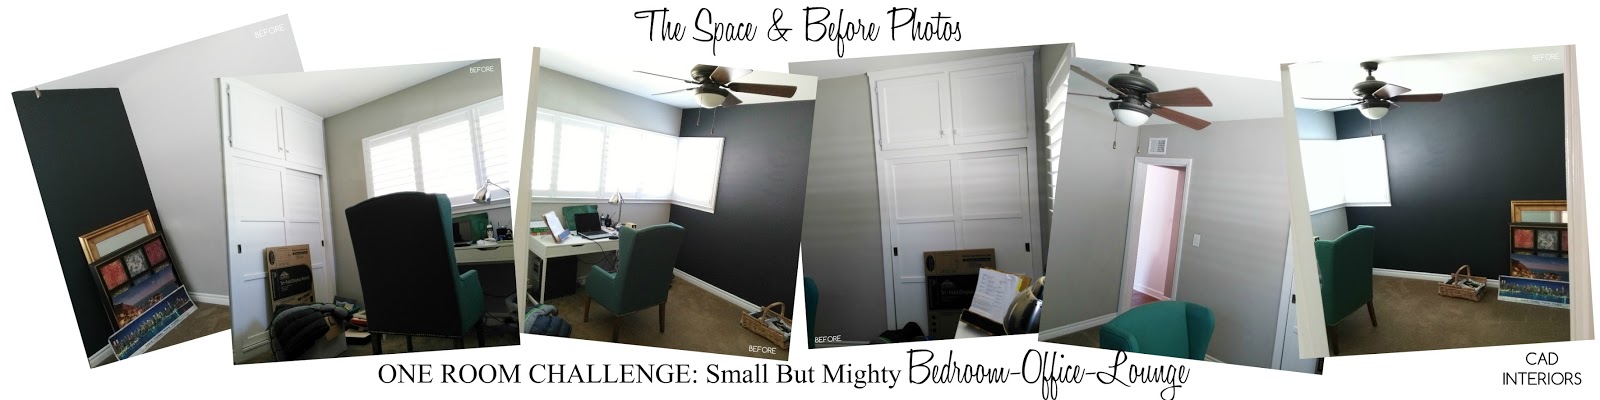 CAD Interiors bedroom study lounge makeover one room challenge interior design decorating home improvement diy